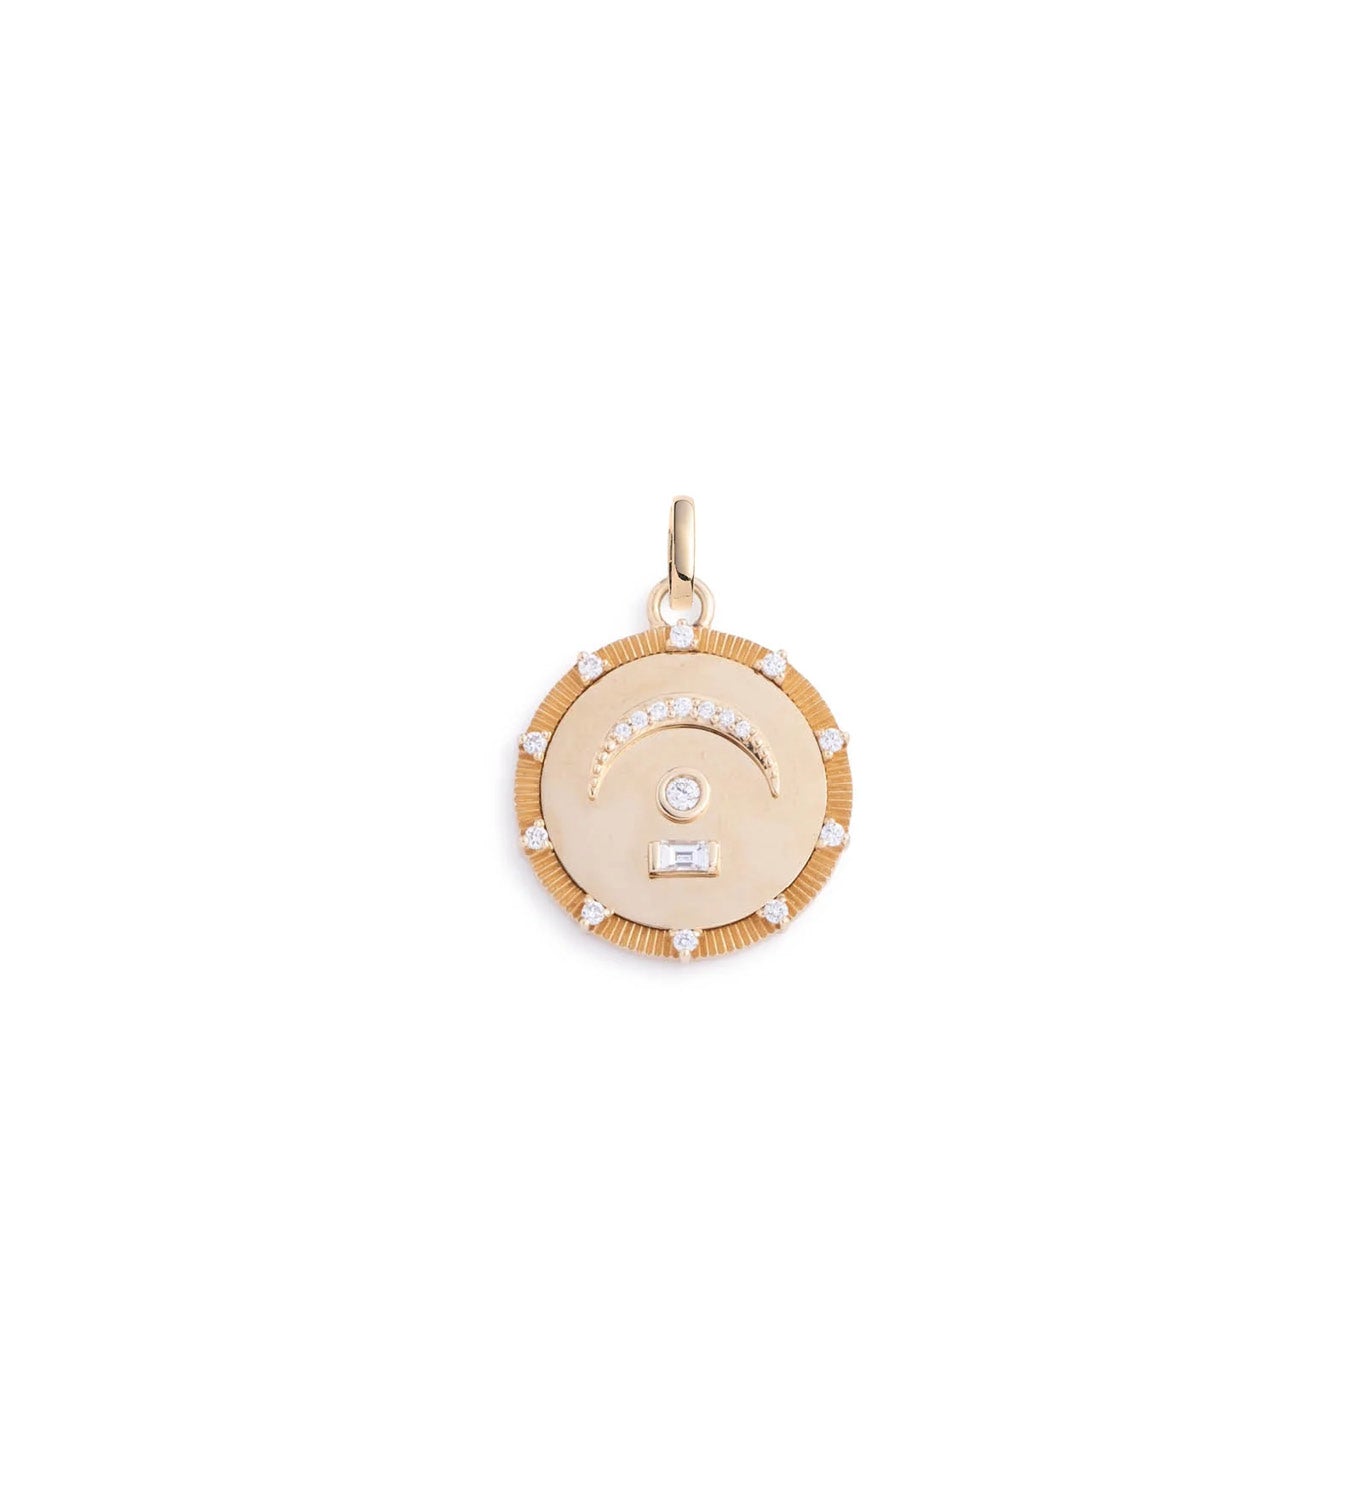 Pause - Internal Compass : Medium Medallion Diamond with Oval Pushgate